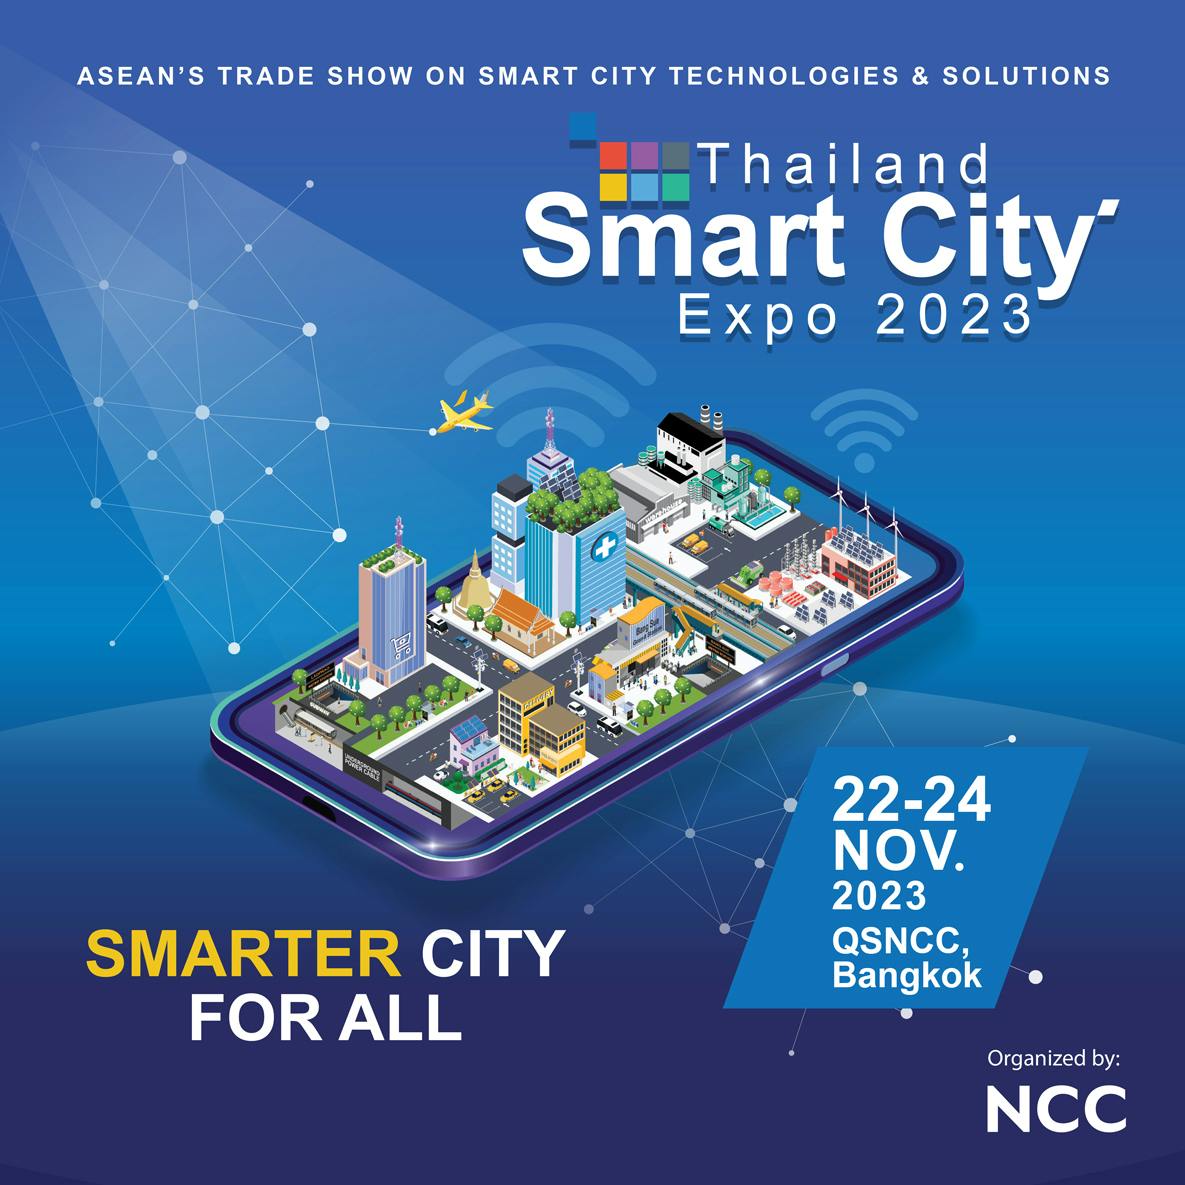 QSNCC Thailand Smart City Expo 2023